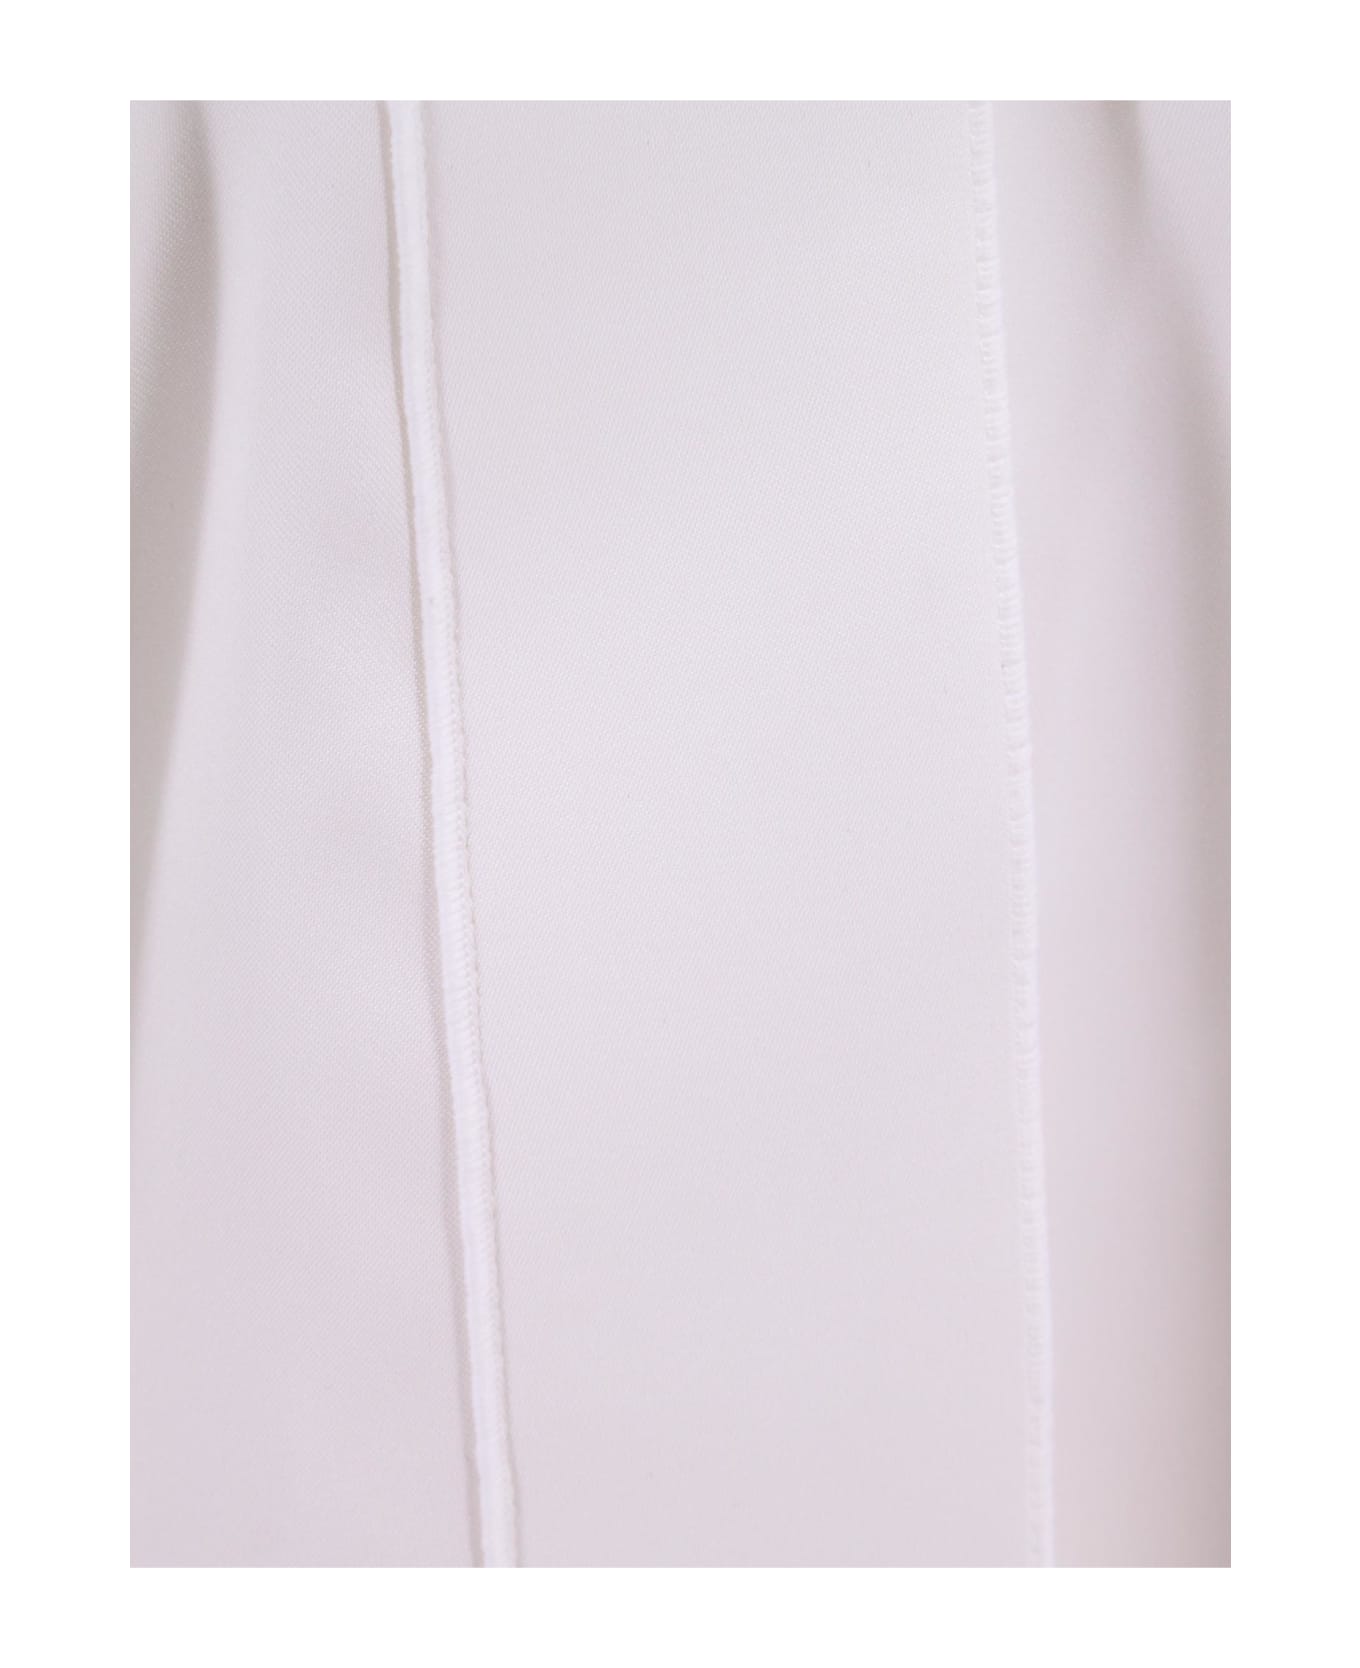 Giorgio Armani Shirt - Bianco